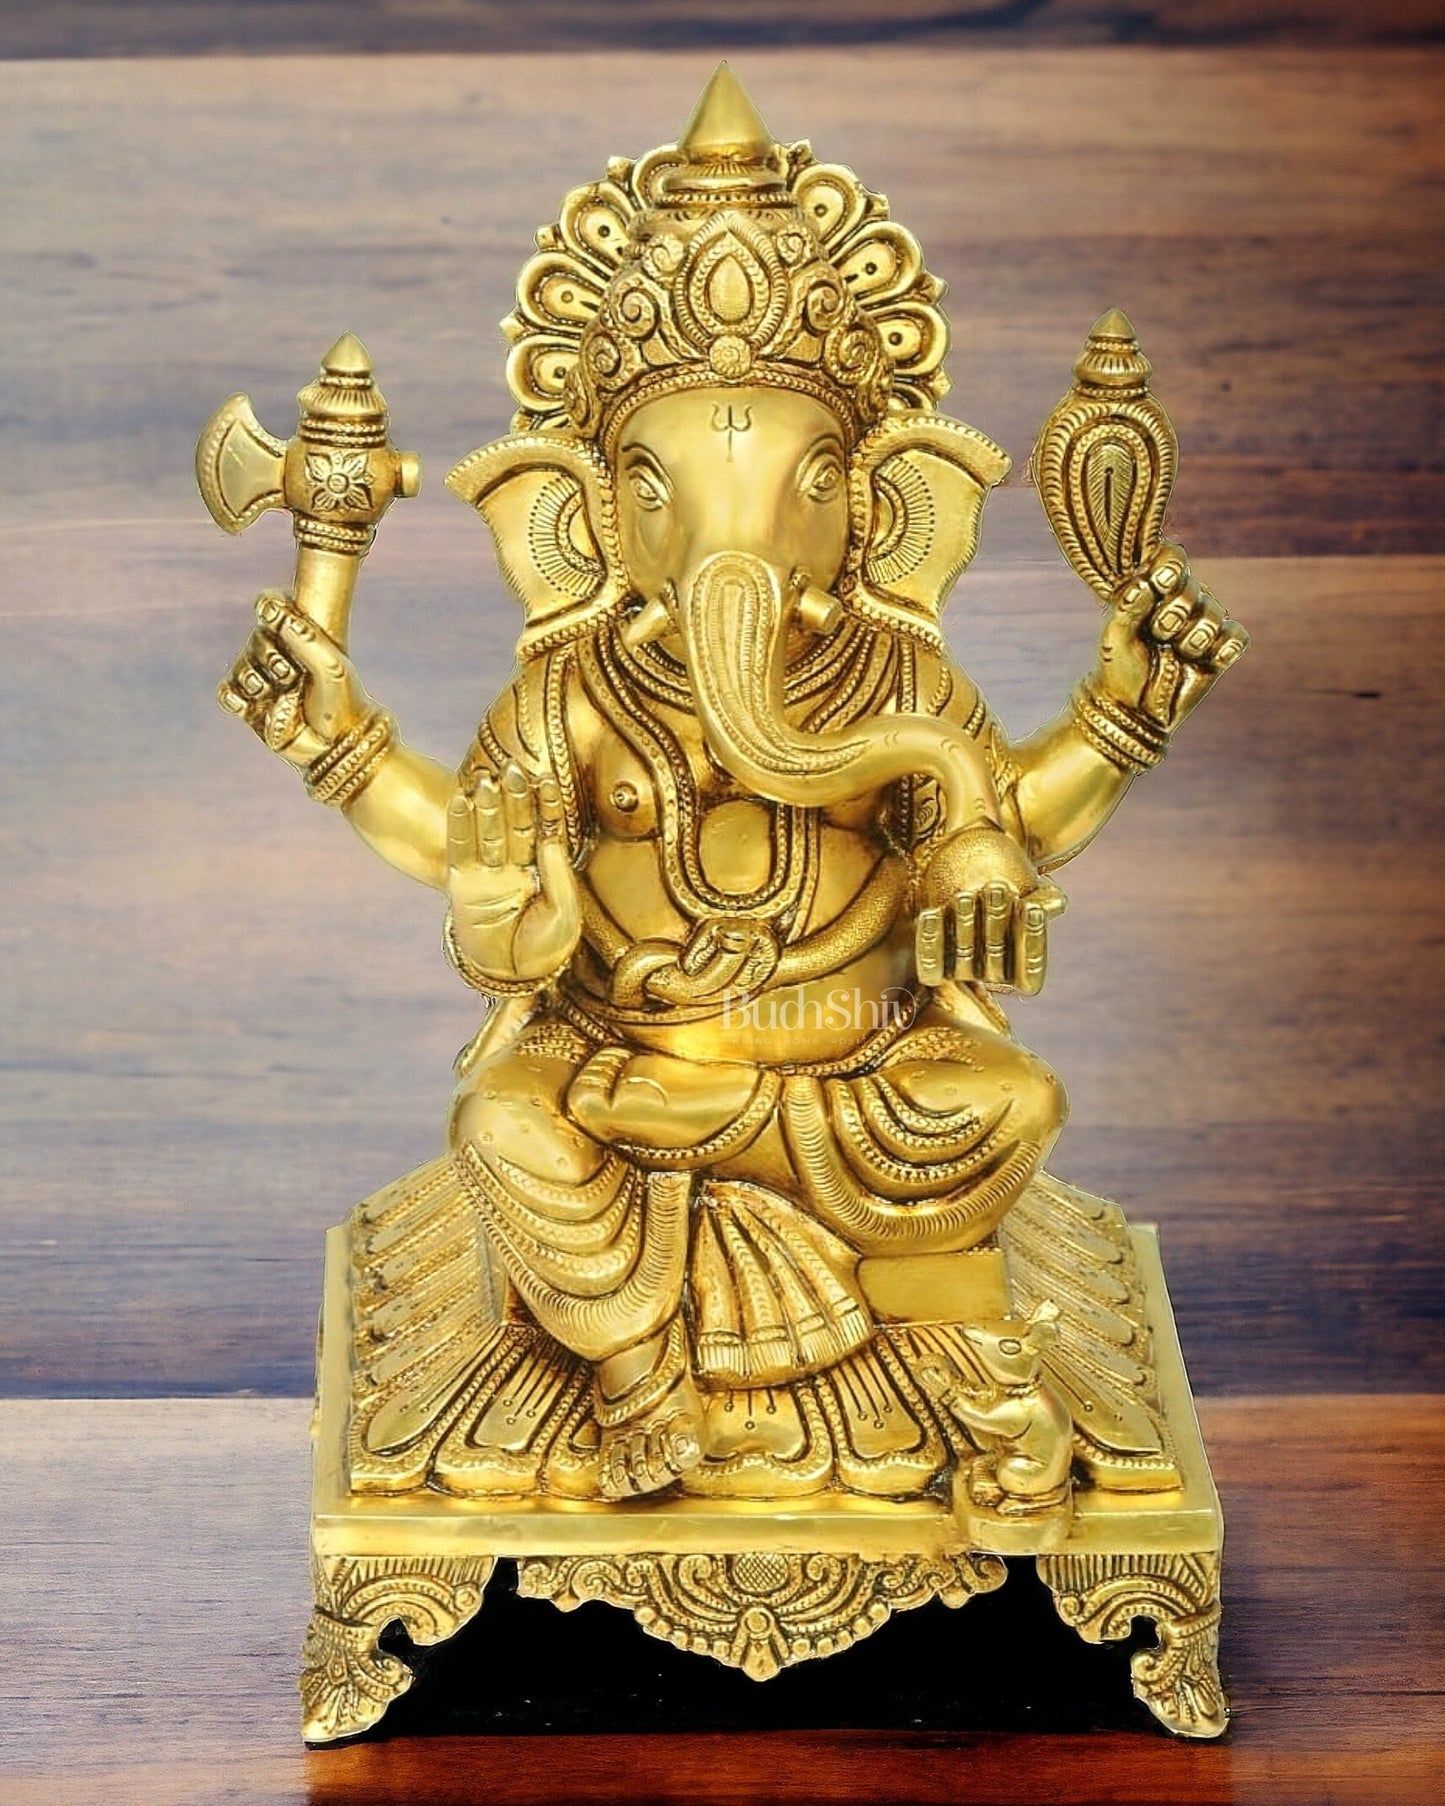 Brass Superfine Lord Ganesha statue 14 inch - Budhshiv.com